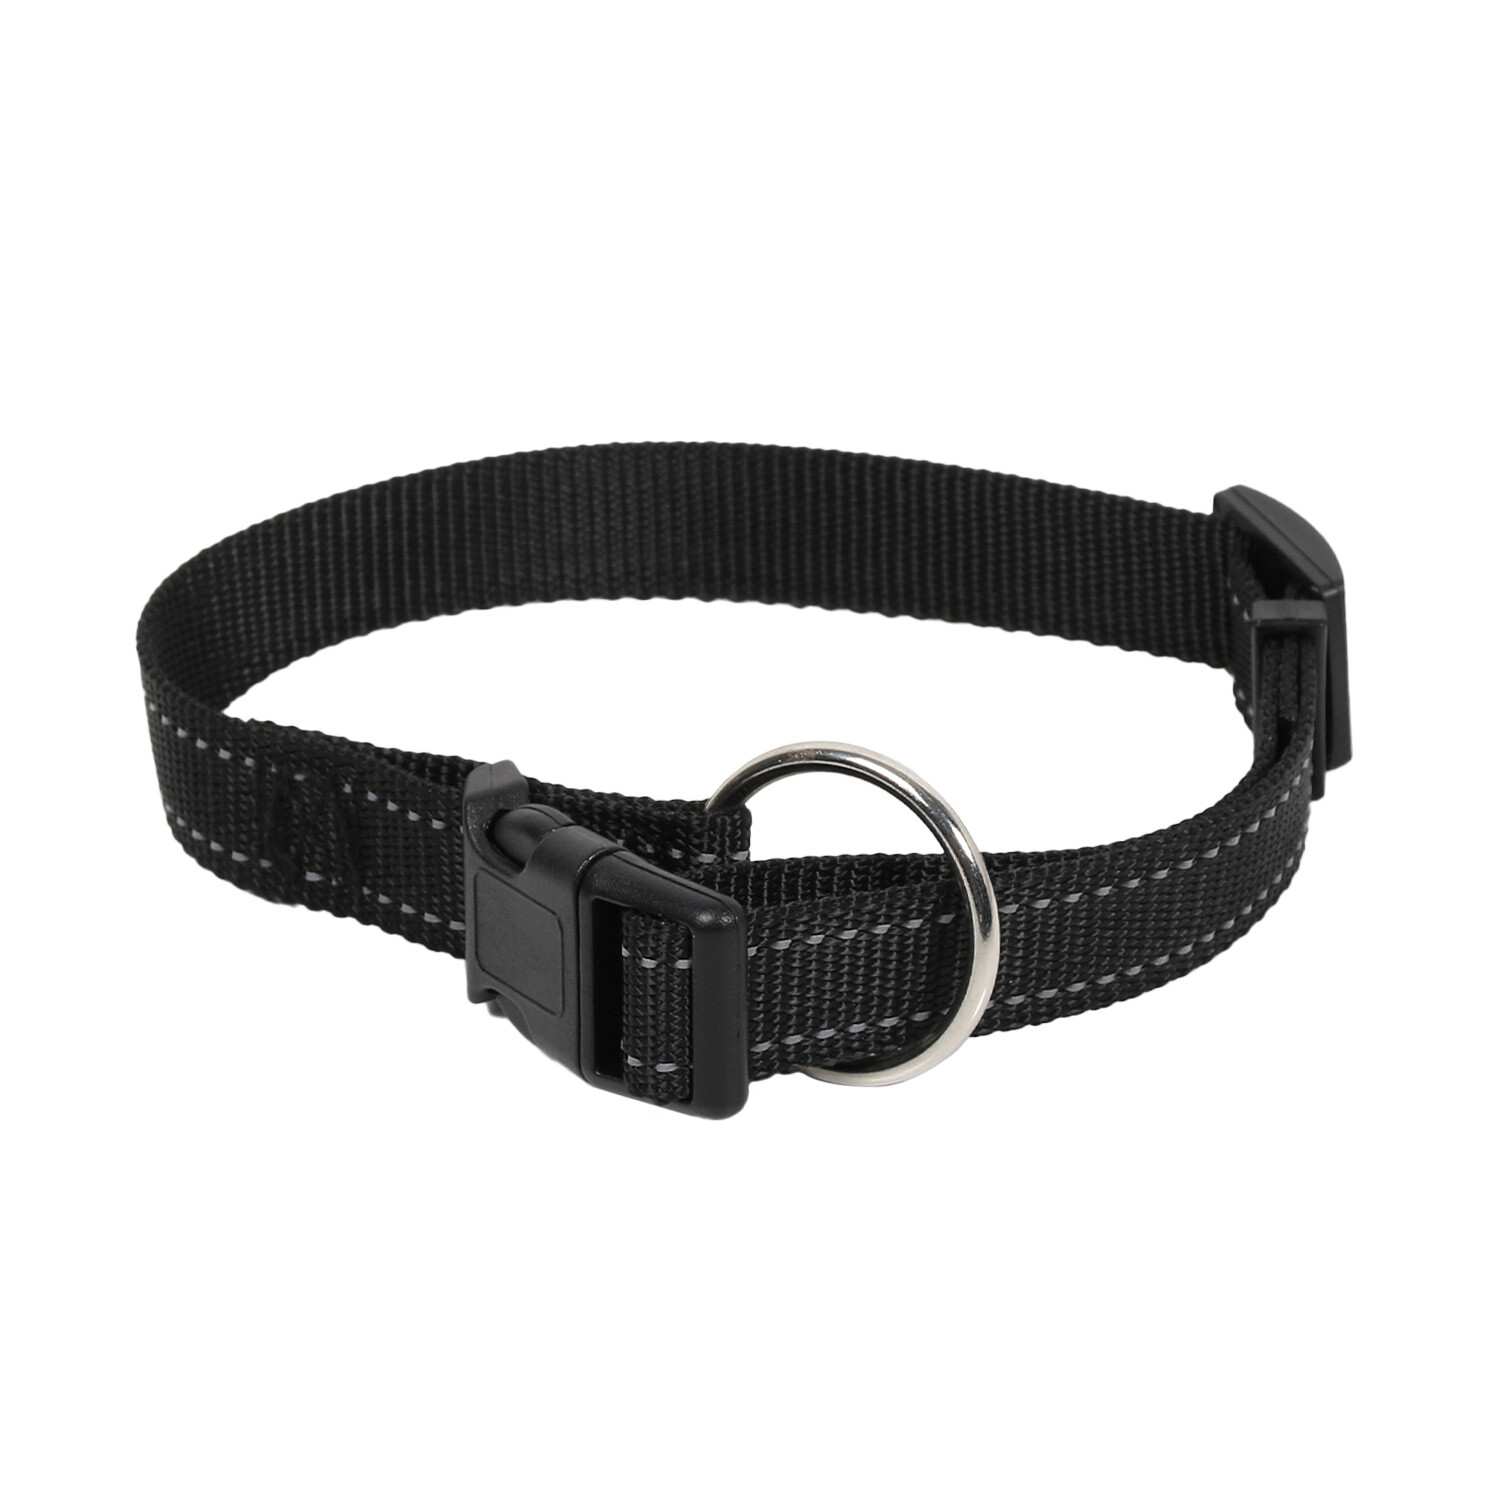 Reflective Nylon Dog Collar - Black / Small Image 3